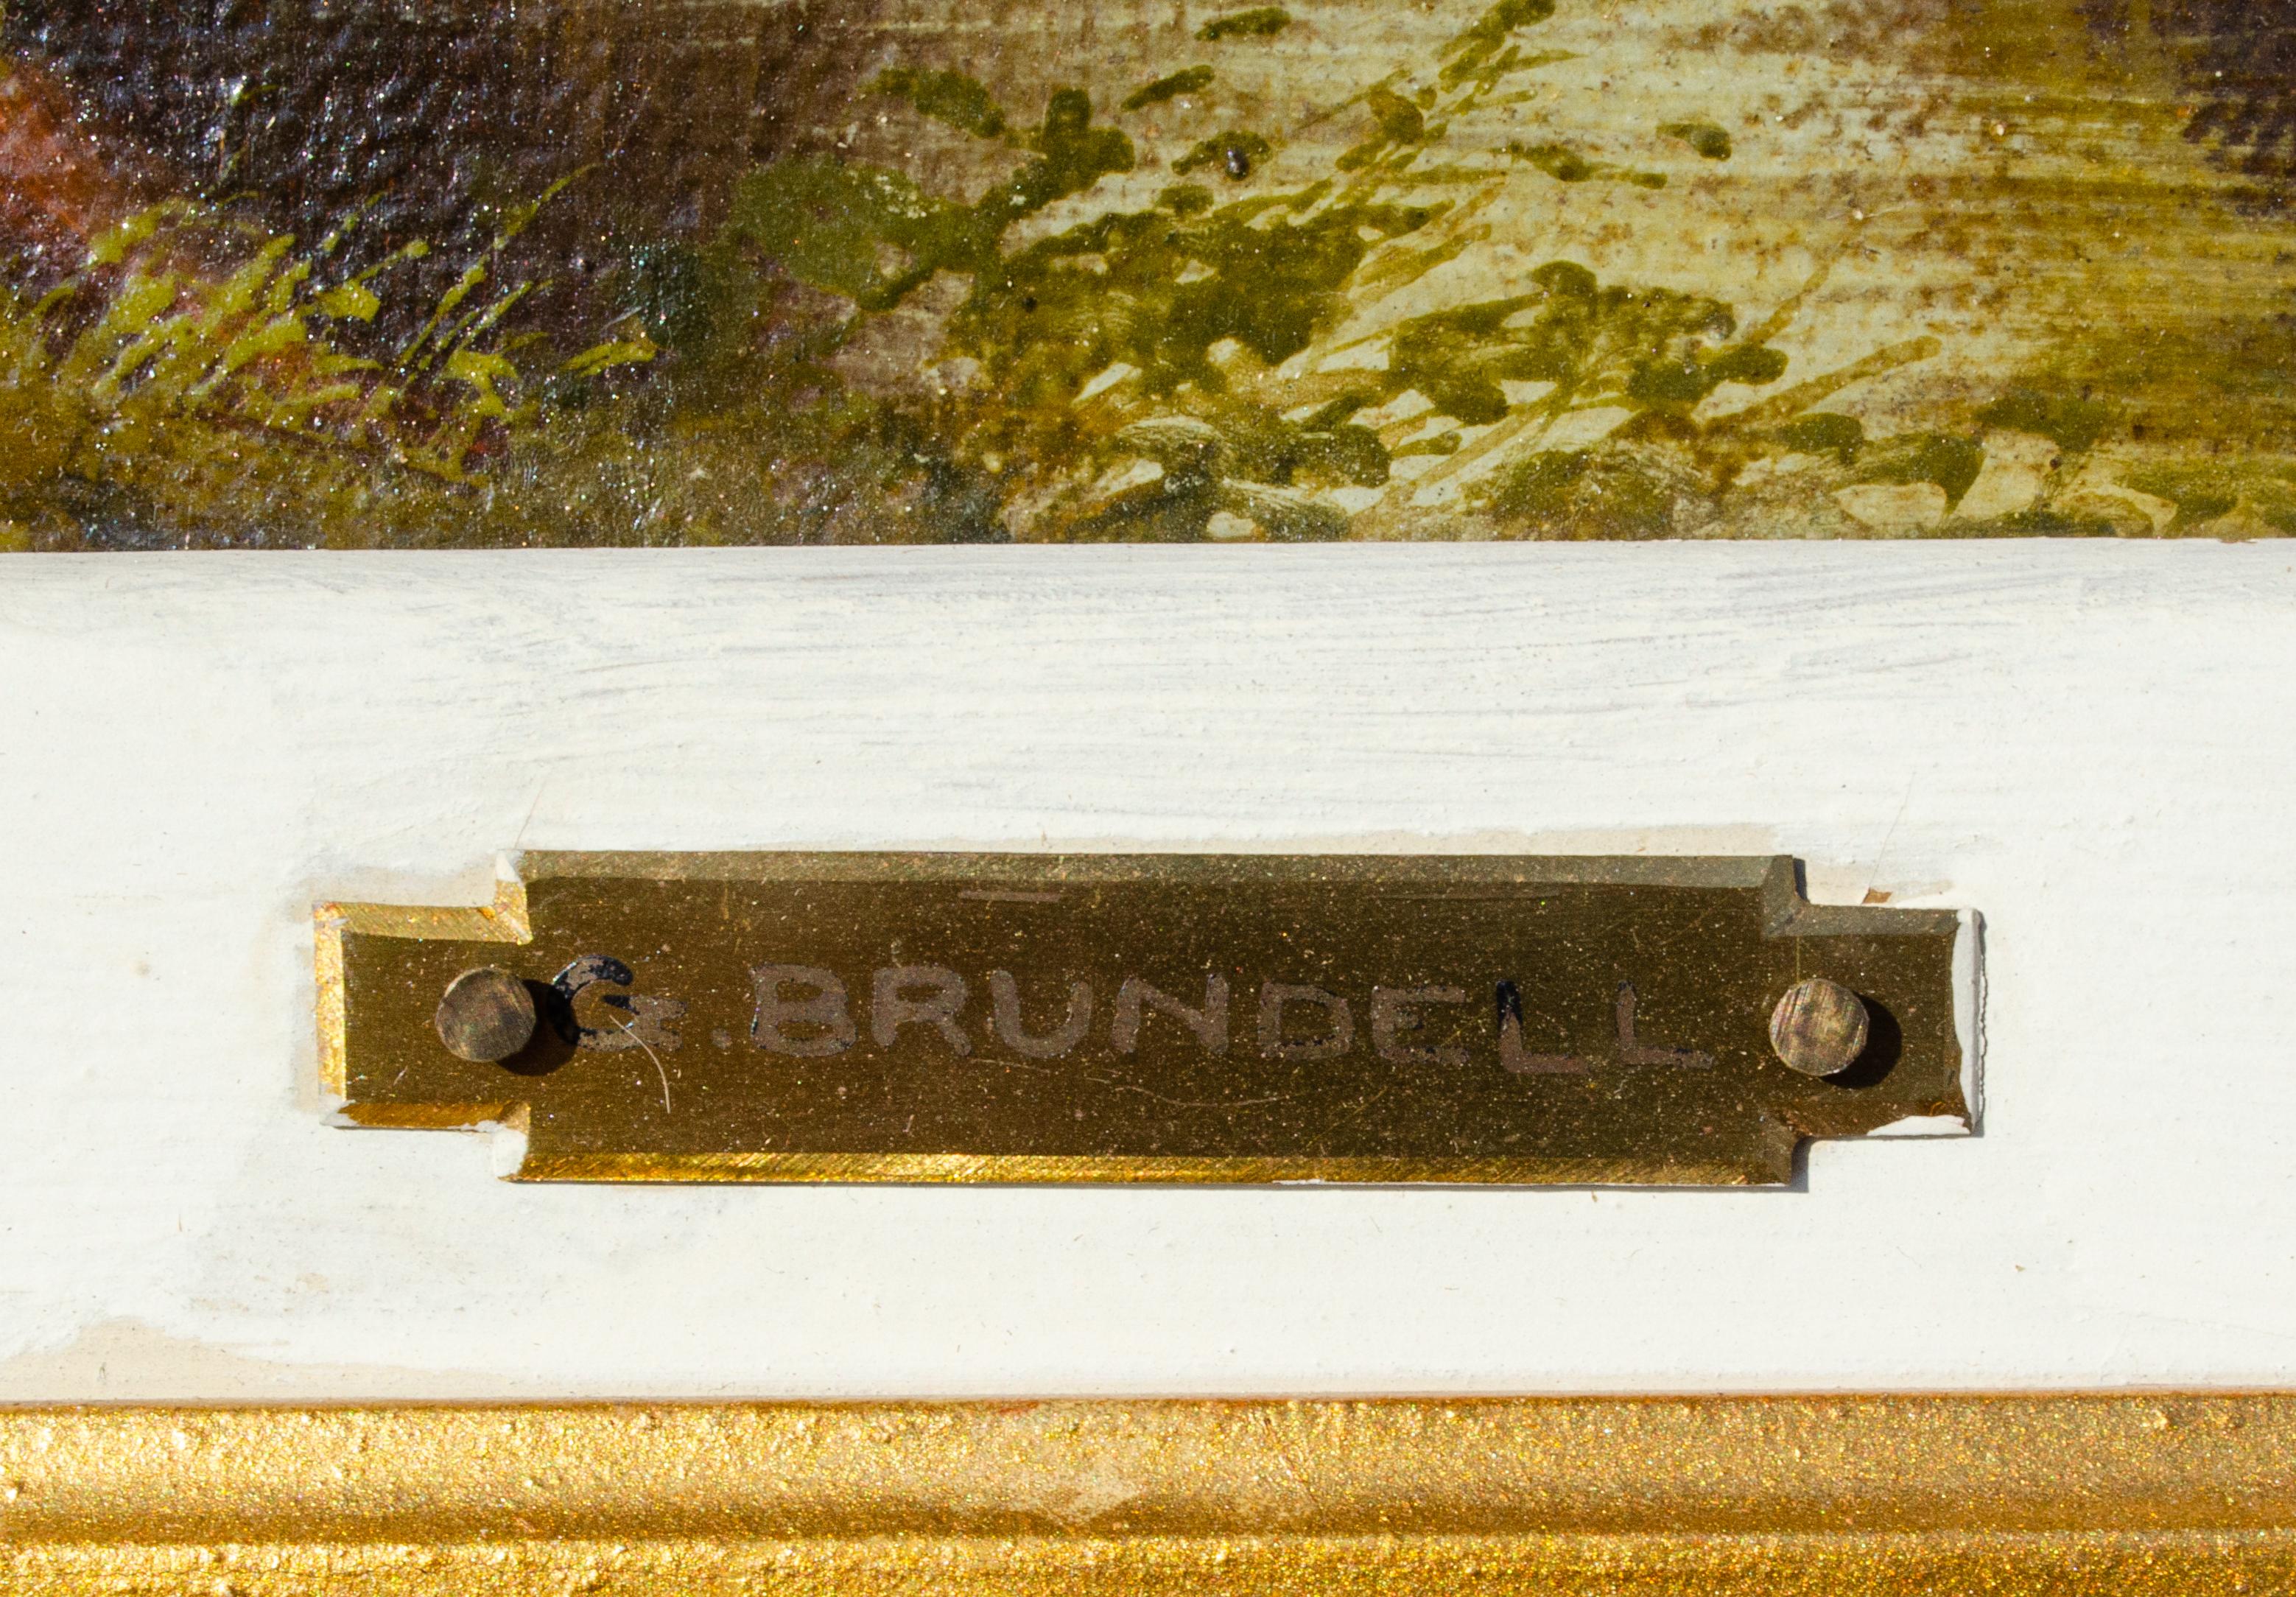 G. Brundell
Ohne Titel, c. Anfang des 20. Jahrhunderts
Öl auf Leinwand
Bildformat: 10 x 18 Zoll.
Gerahmt: 20 x 27 7/8 x 2 Zoll.
